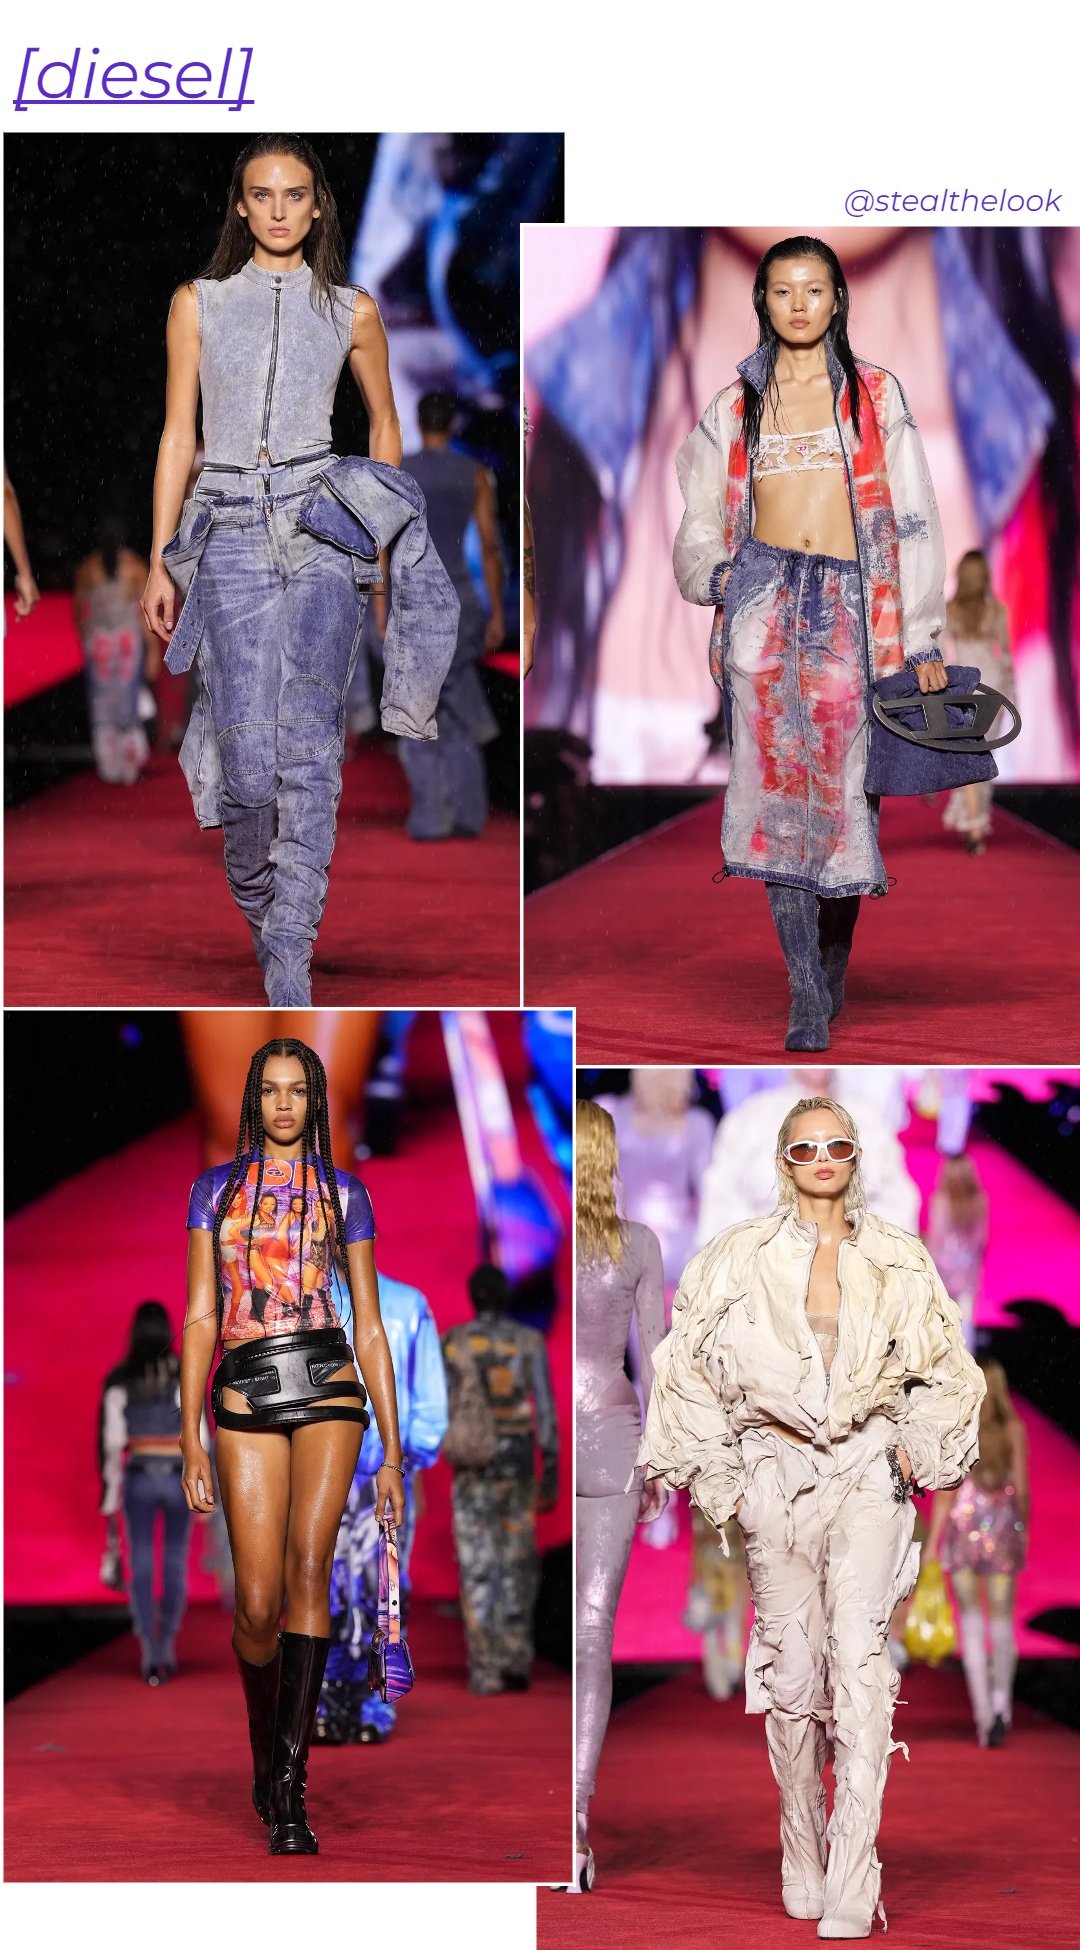 Diesel - roupas diversas - Milano Fashion Week - verão - colagem de imagens - https://stealthelook.com.br